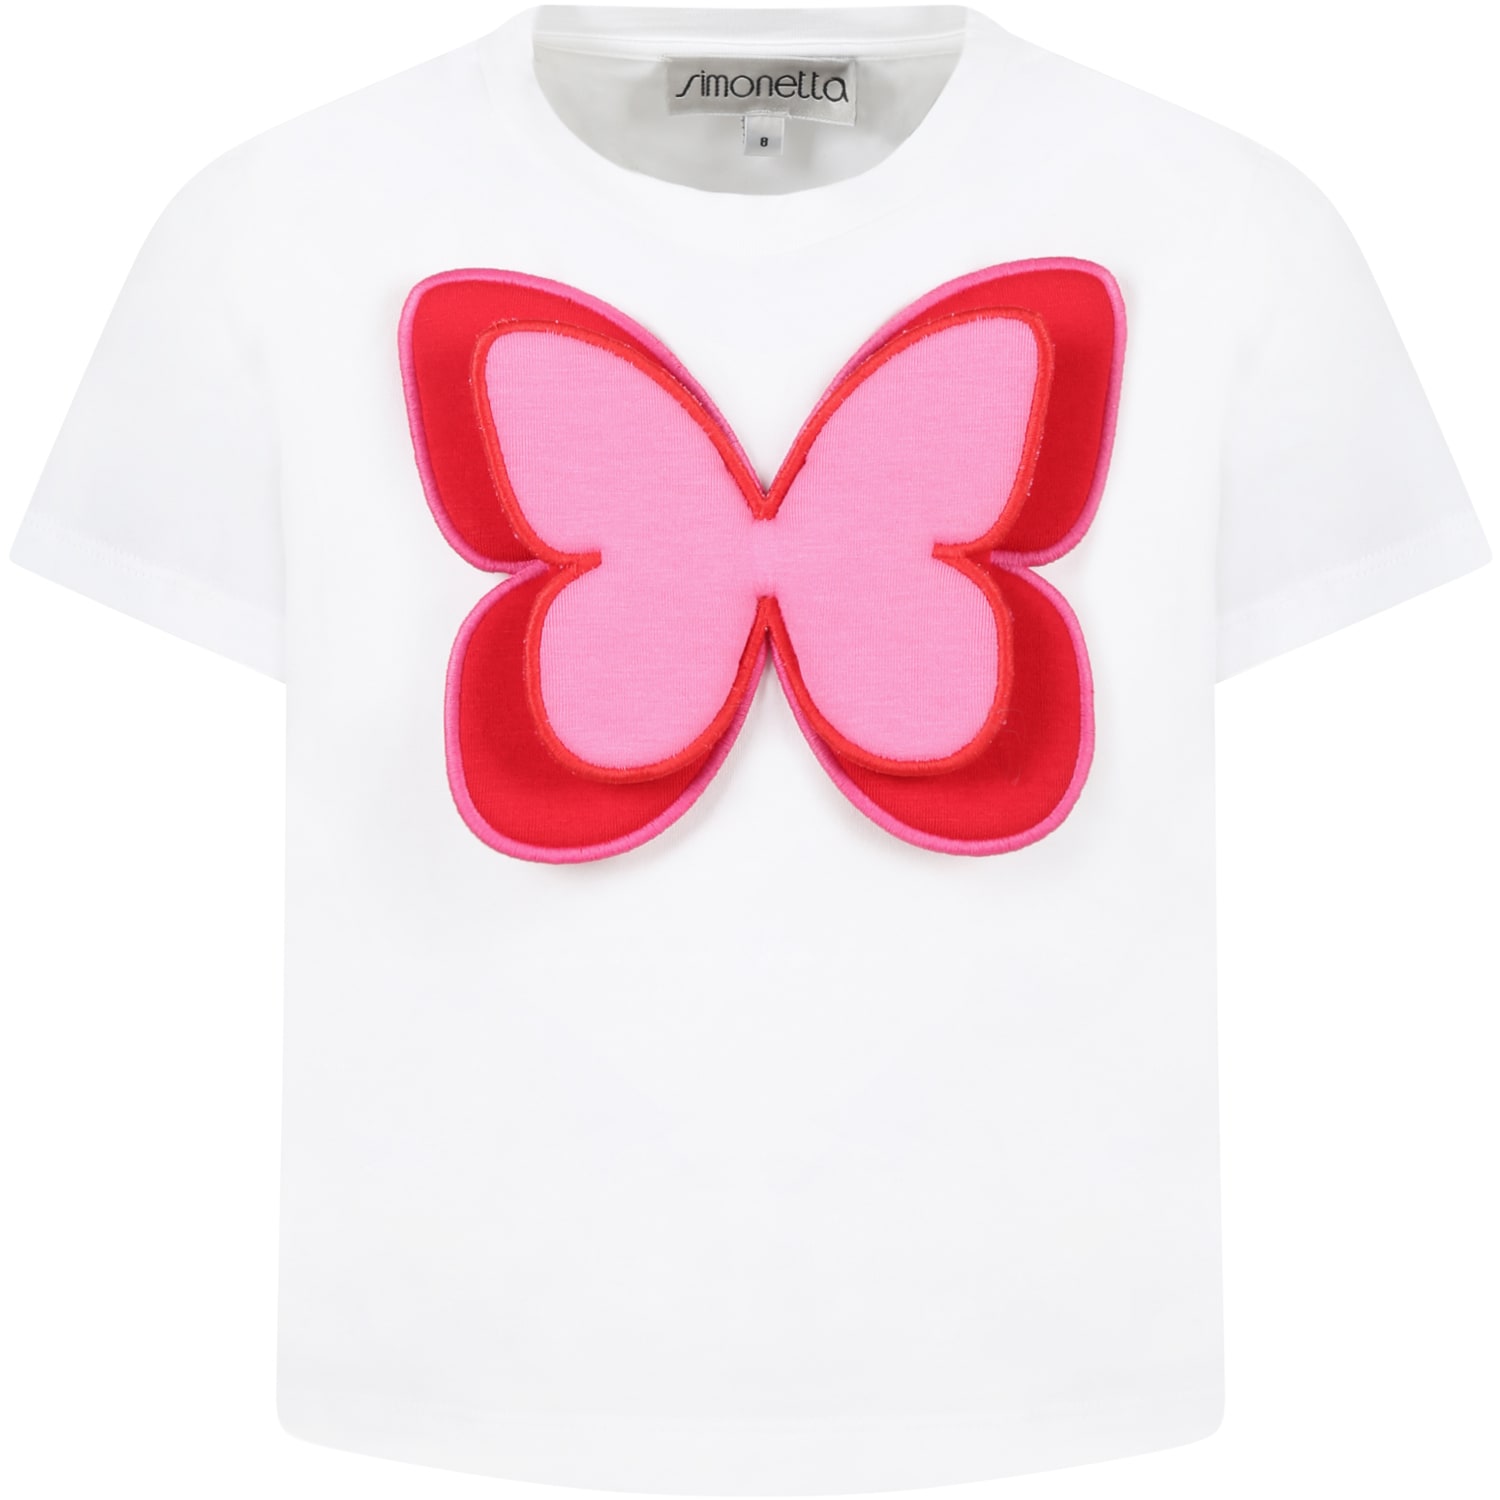 Simonetta White T-shirt For Girl With Butterfly